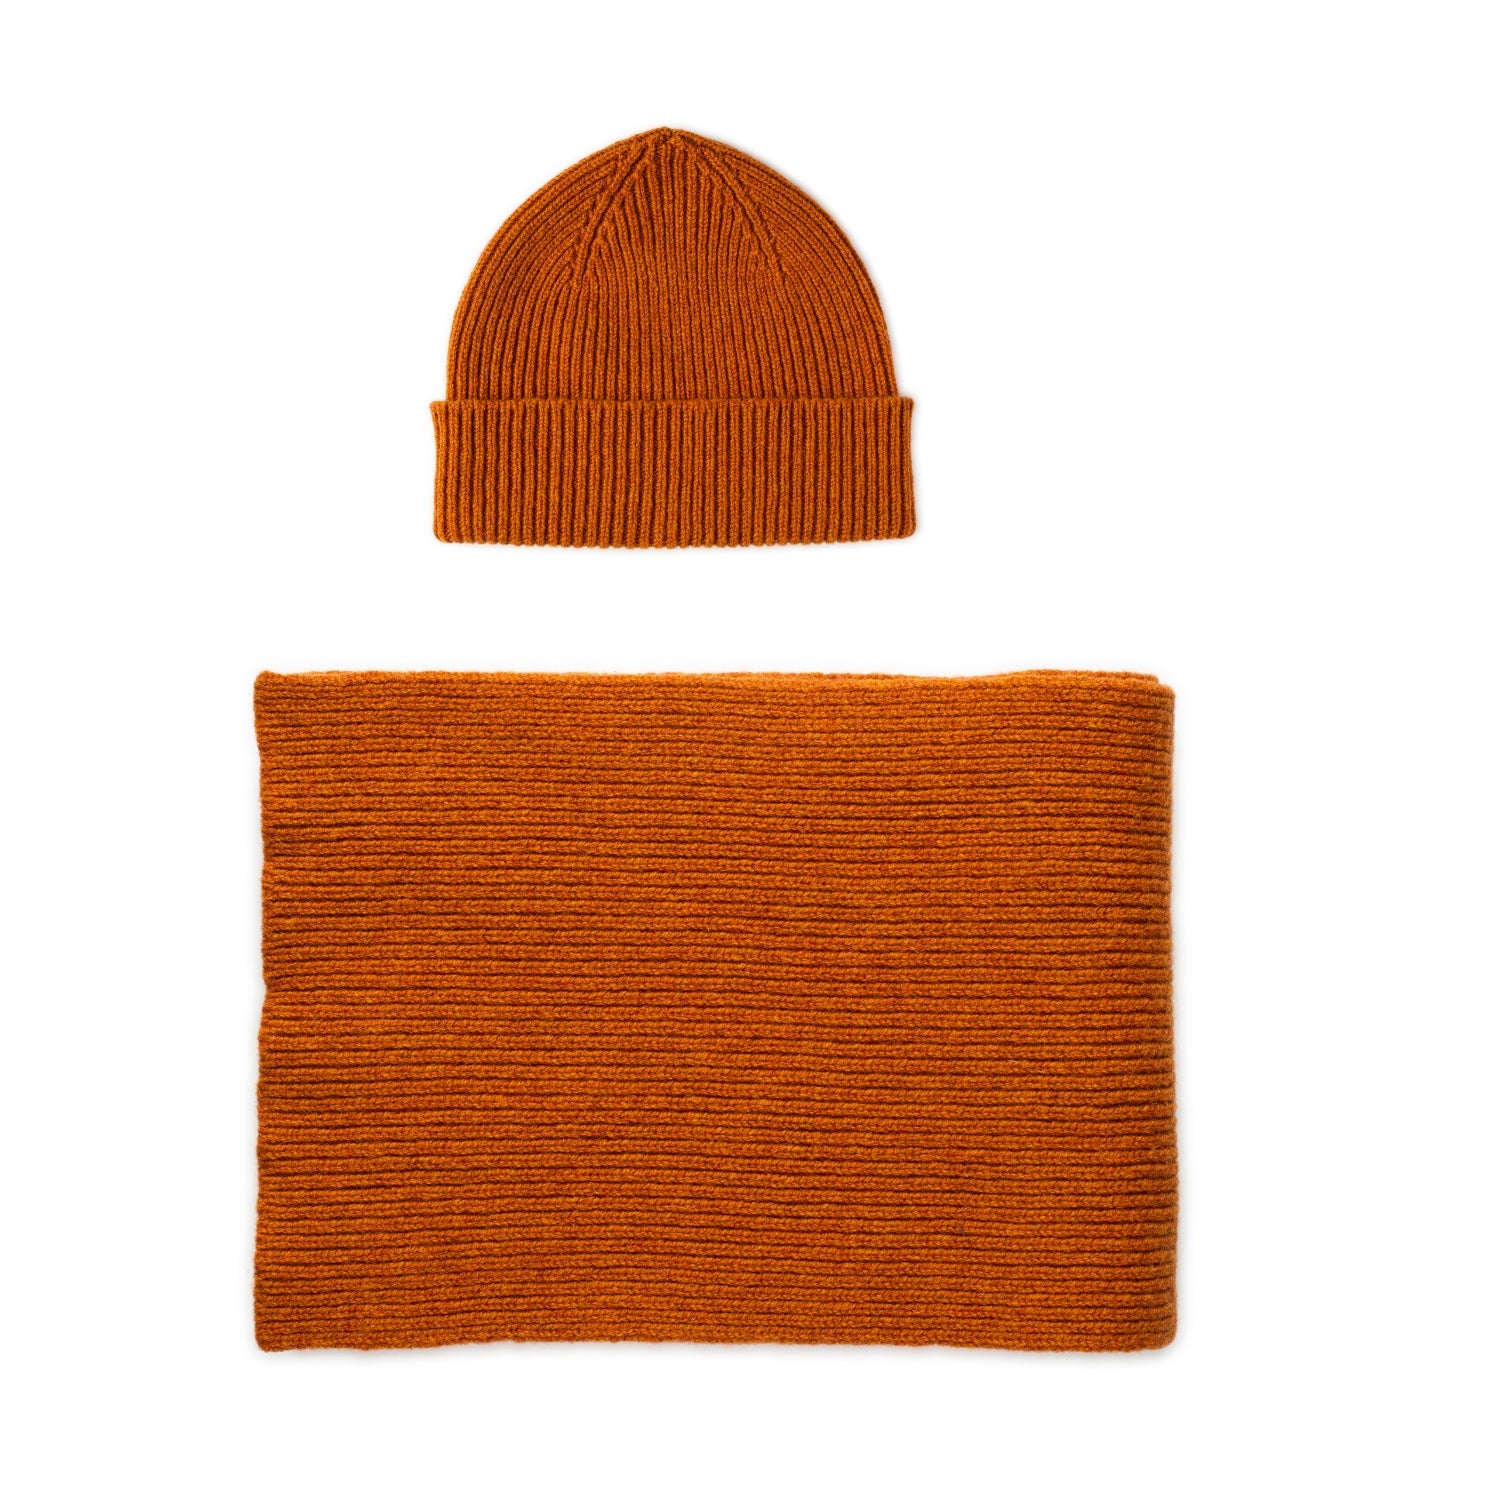 Orange Wool Hat and Scarf Set - Ribbed